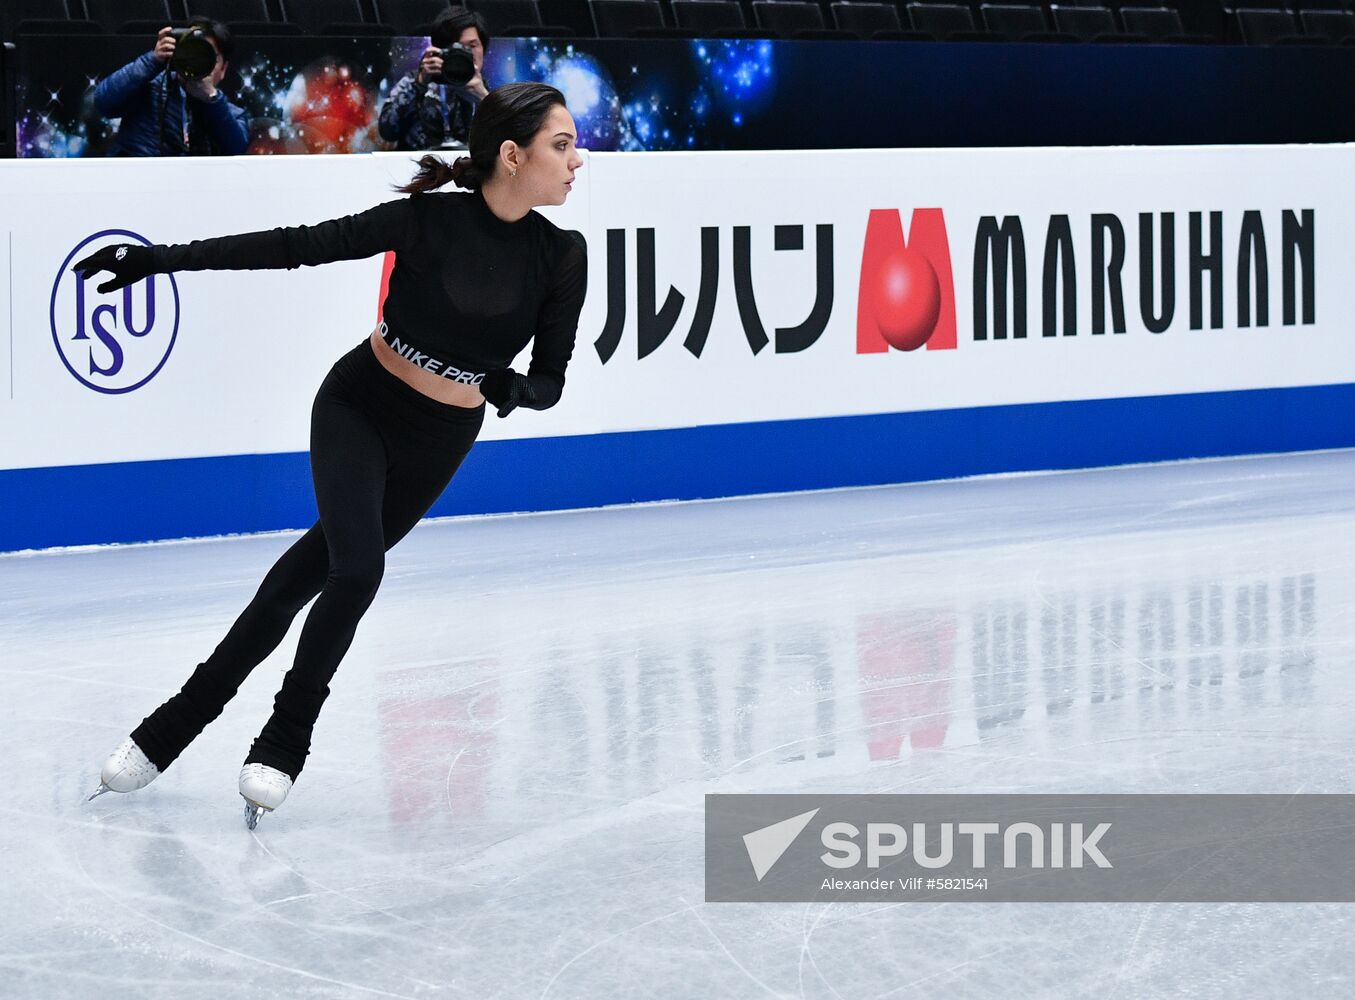 Japan Figure Skating Worlds Training